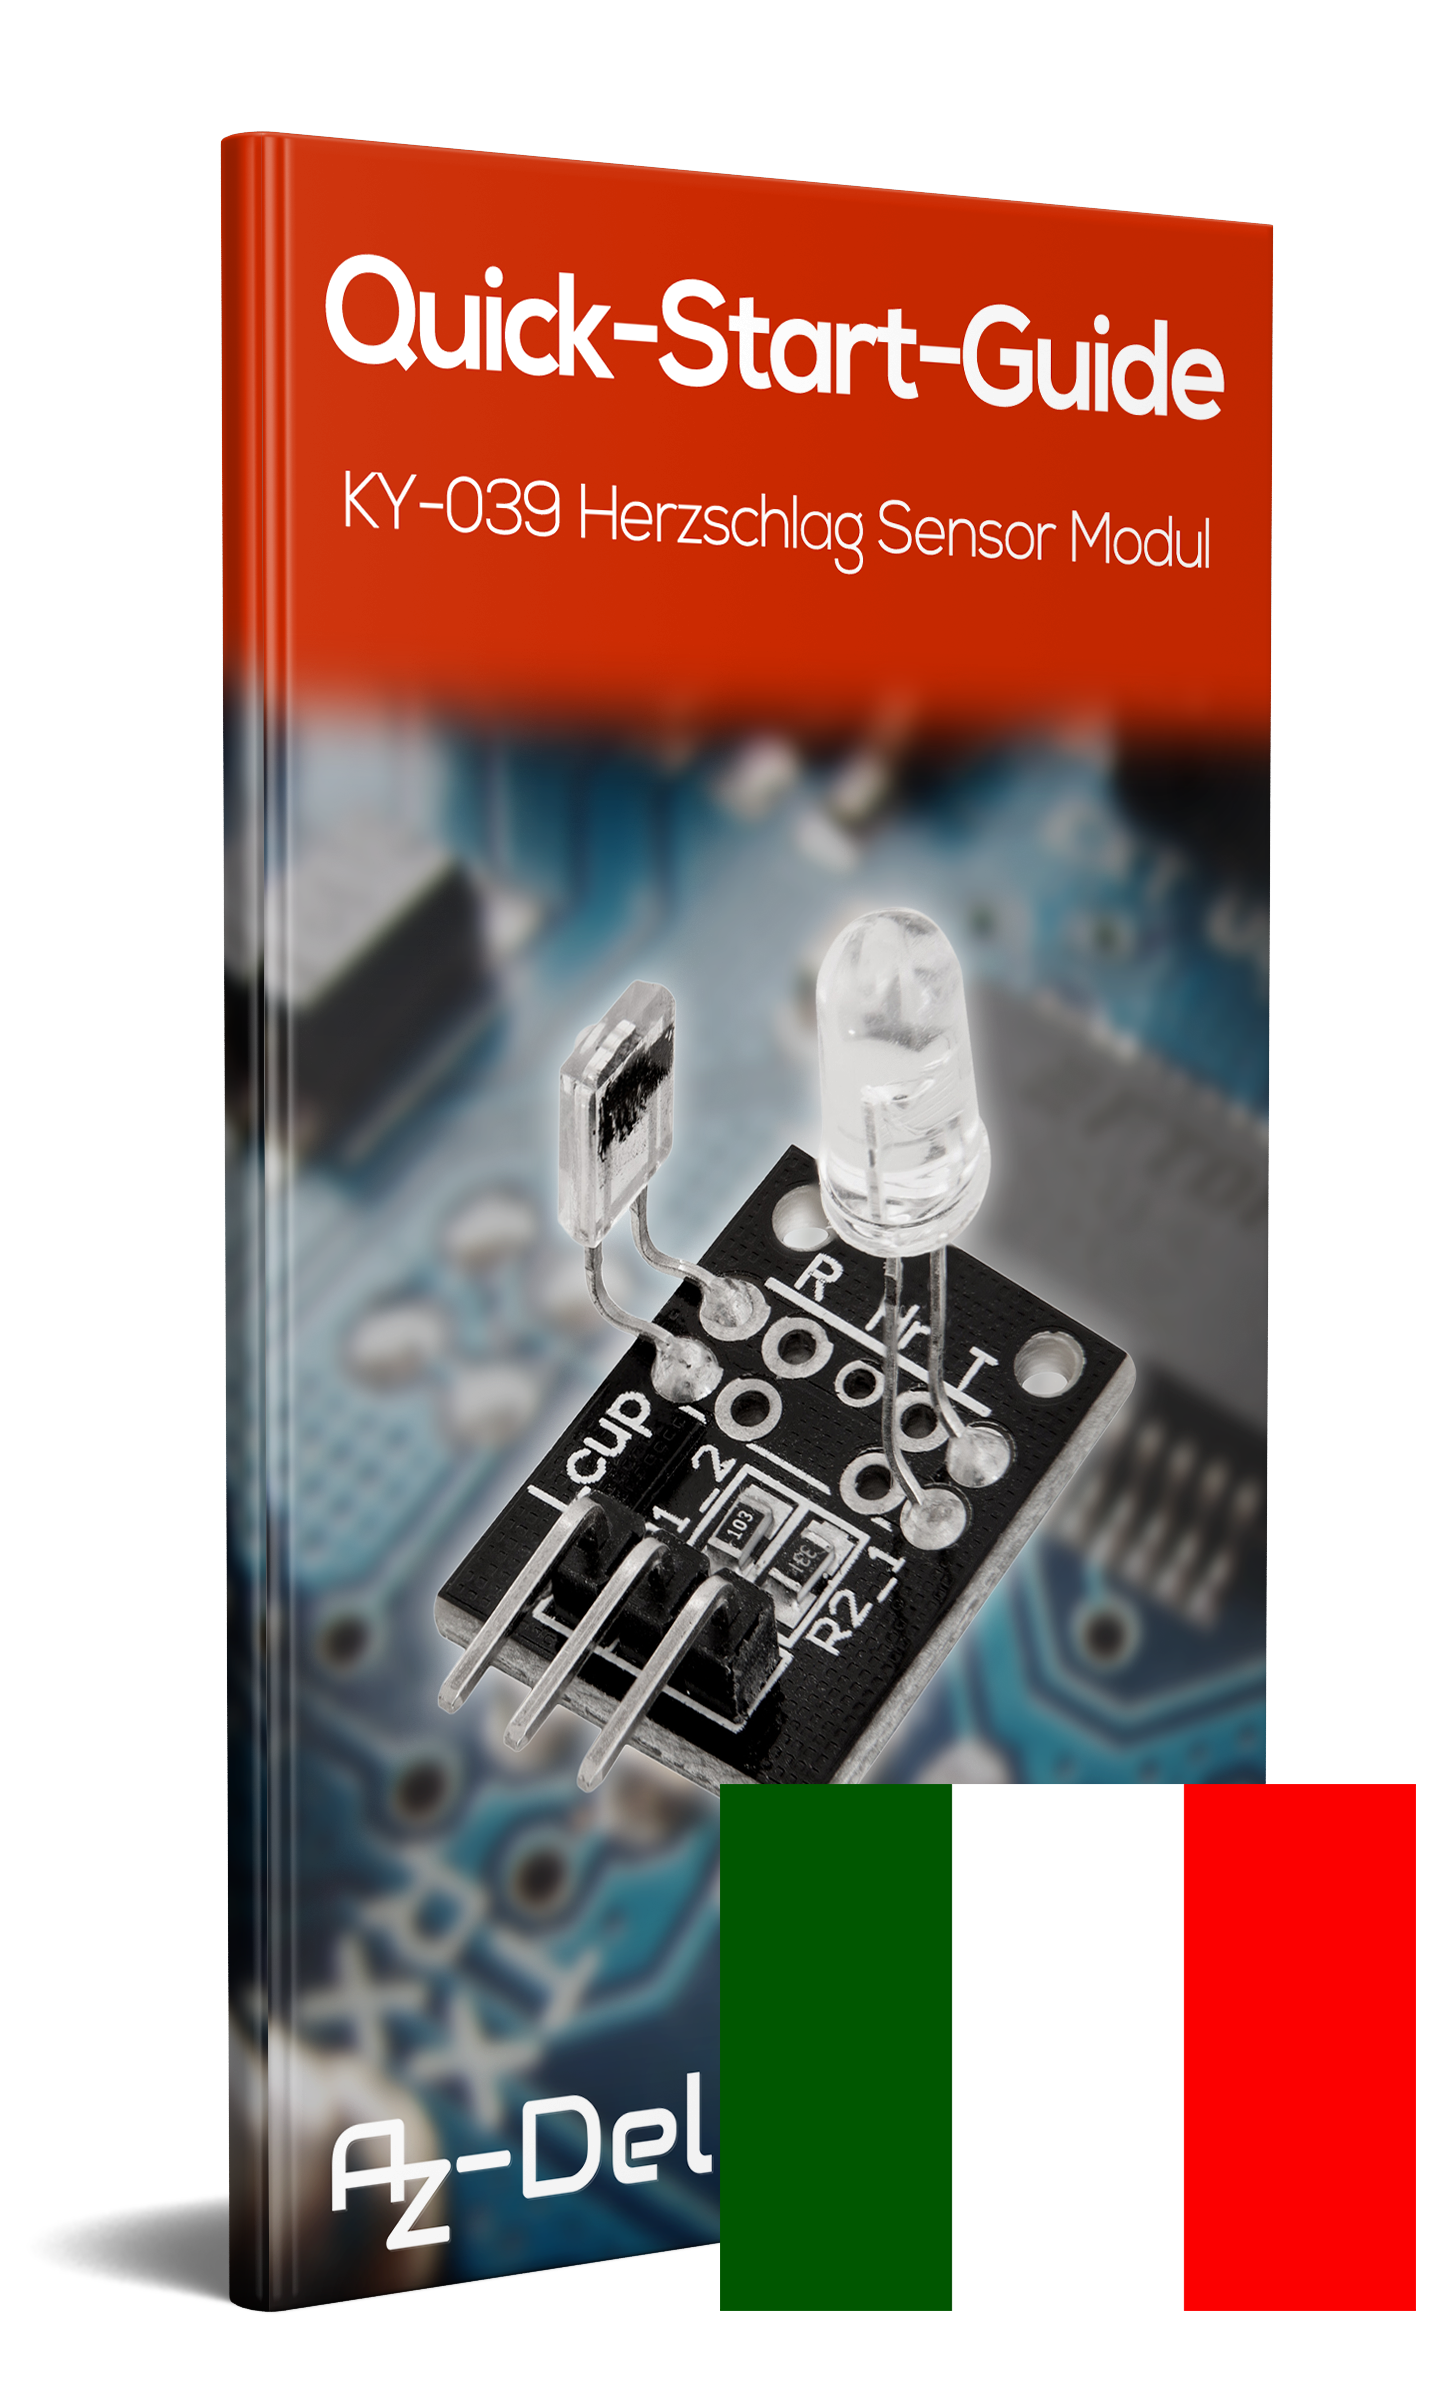 Ky-039 Heartbeat sensor module finger Heartbeat detector